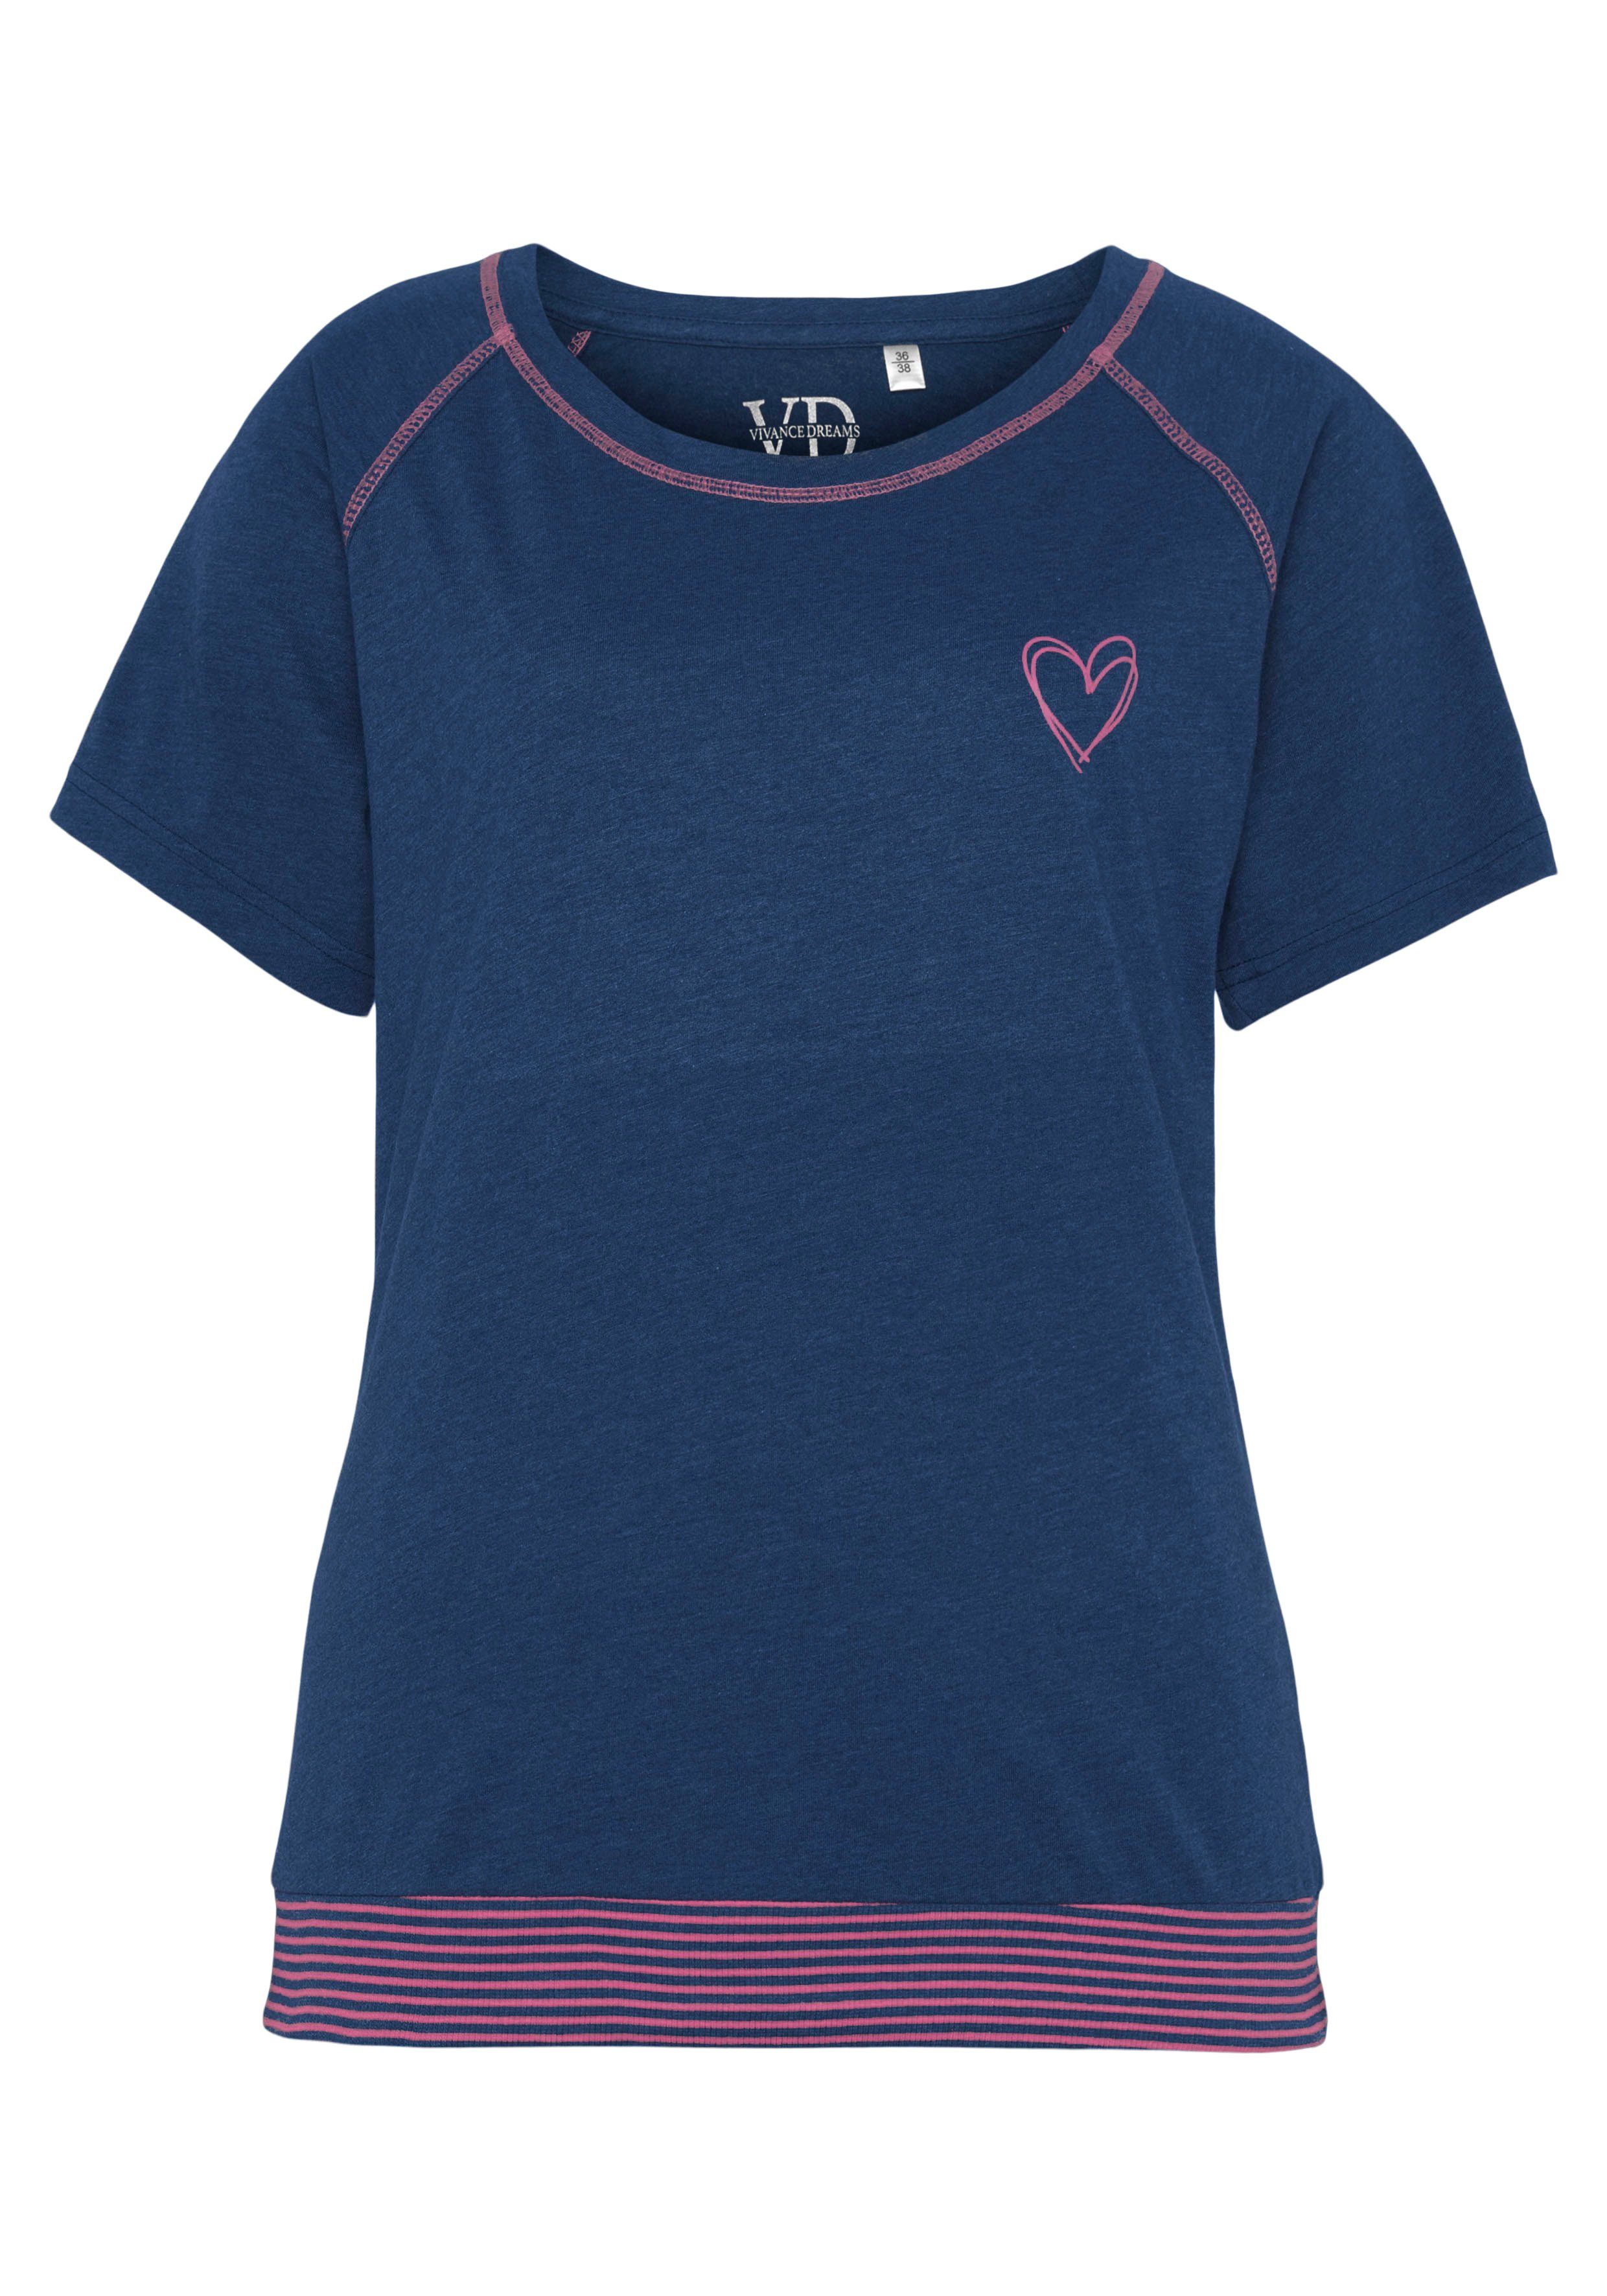 Vivance Dreams Shorty (2 dekorativen mit Flatlock-Nähten Neonfarben in tlg) jeansblau/neon-pink